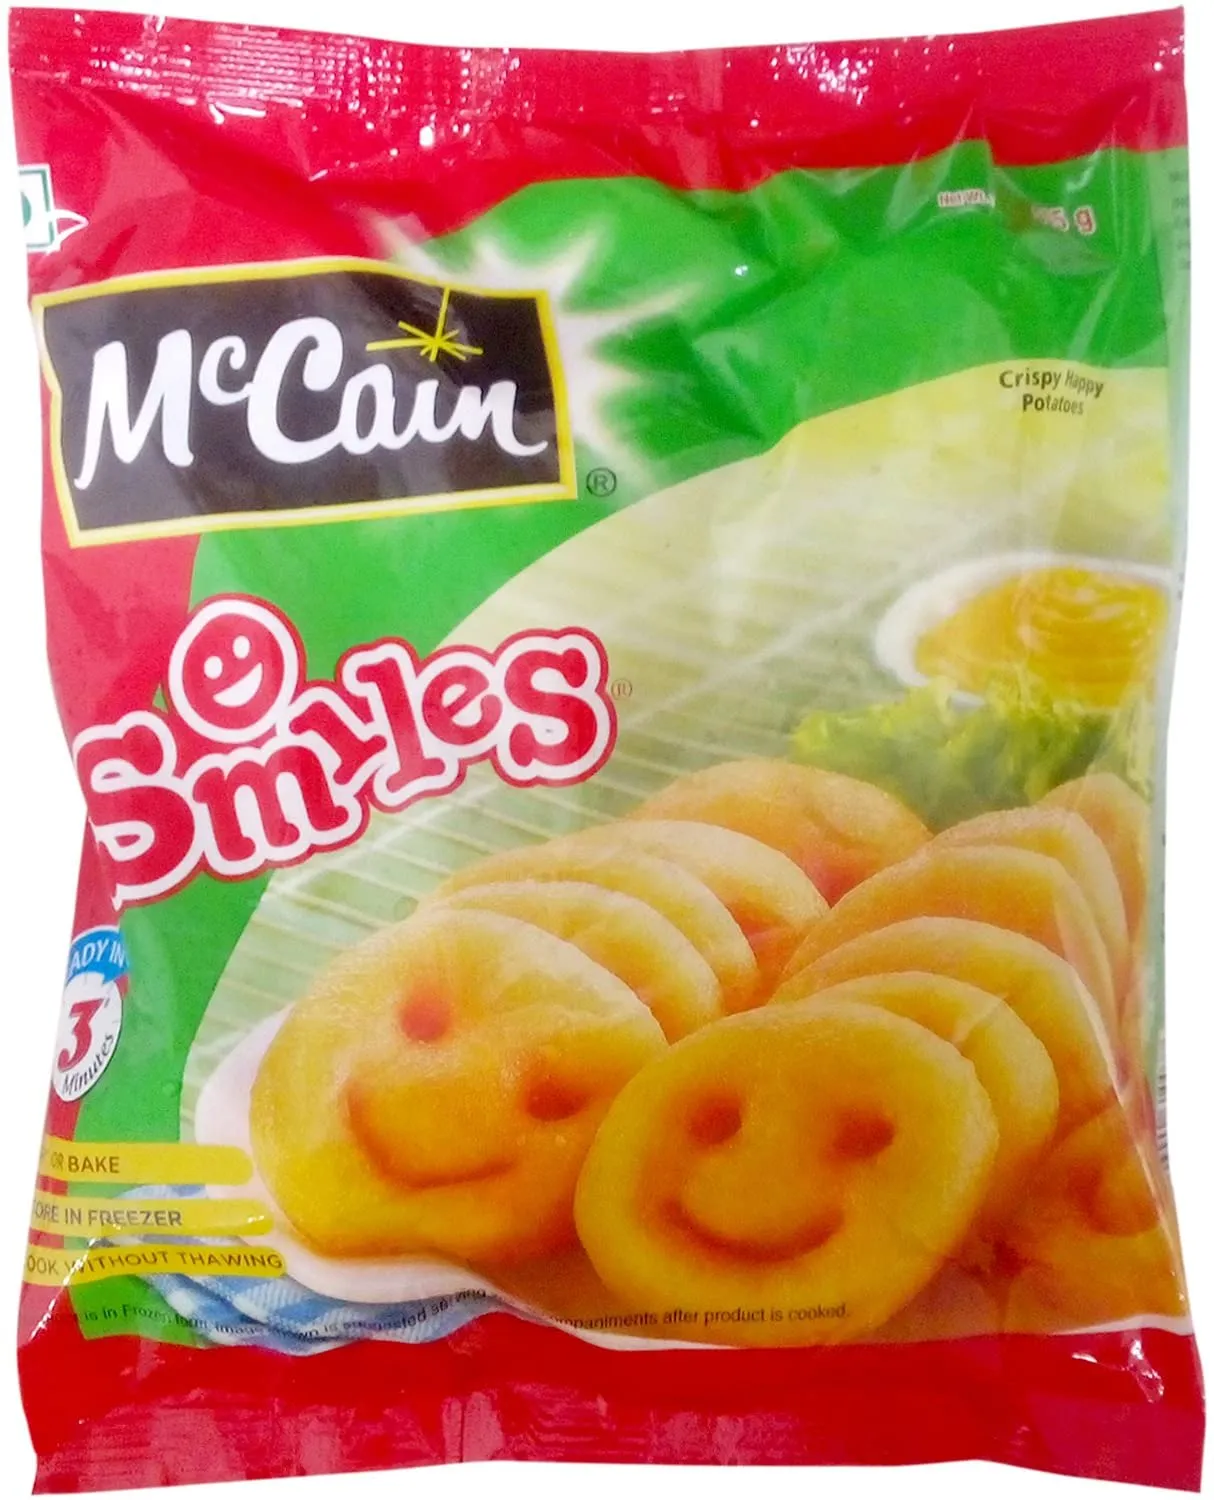 Mccain Smiles Regular Pack 415 GM